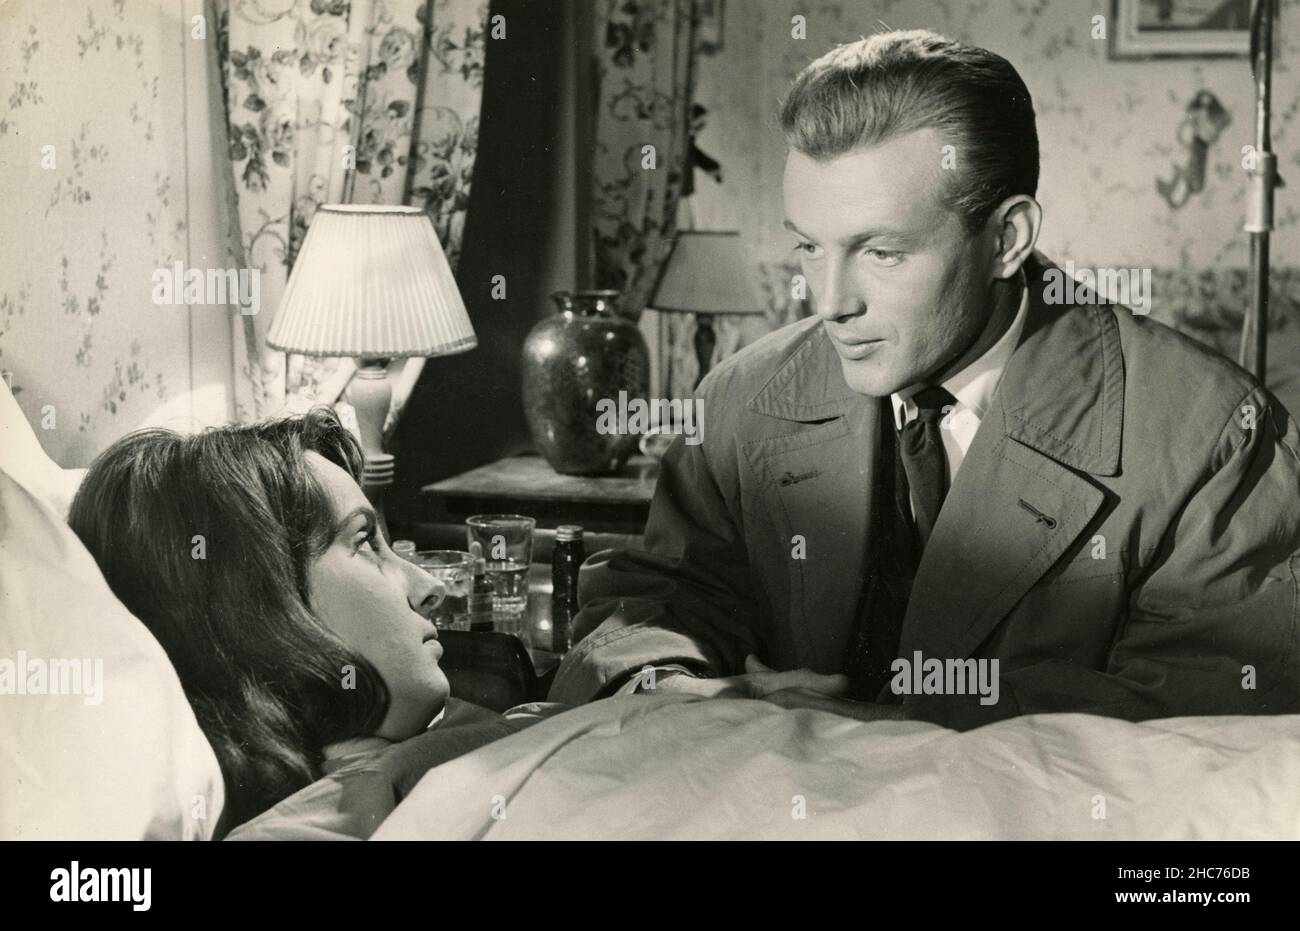 L'attore francese Jacques Sernas nel film Amarti è il Mio Peccato (amarti è il mio peccato), Italia 1954 Foto Stock